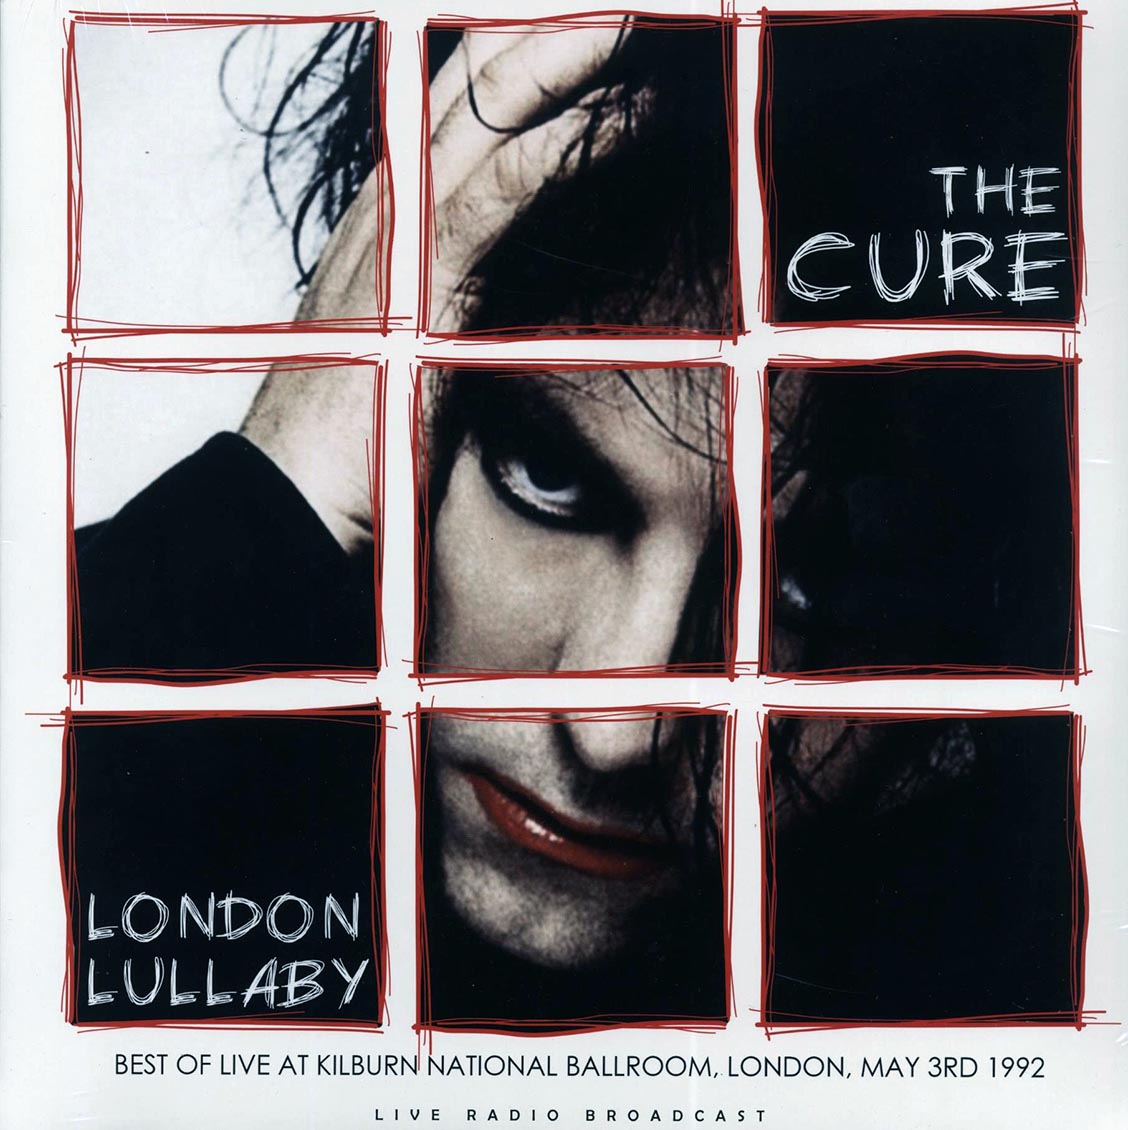 The Cure - London Lullaby: Best Of Live At Kilburn National Ballroom, London, May 3rd 1992 - Vinyl LP